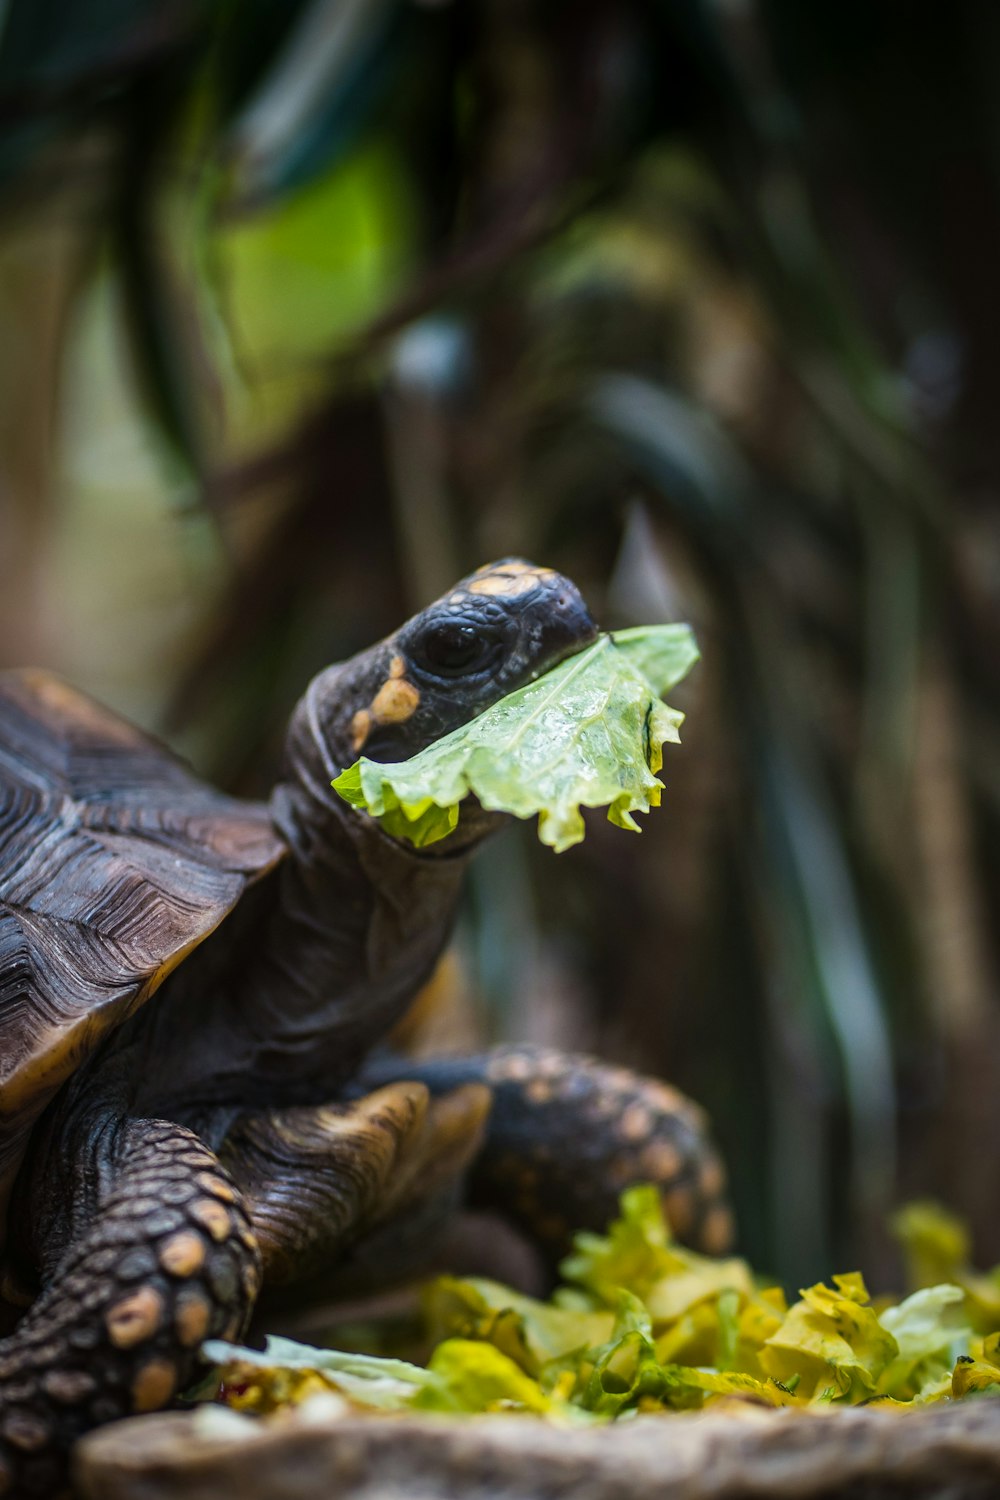 a tortoise eating a leaf of lettuce